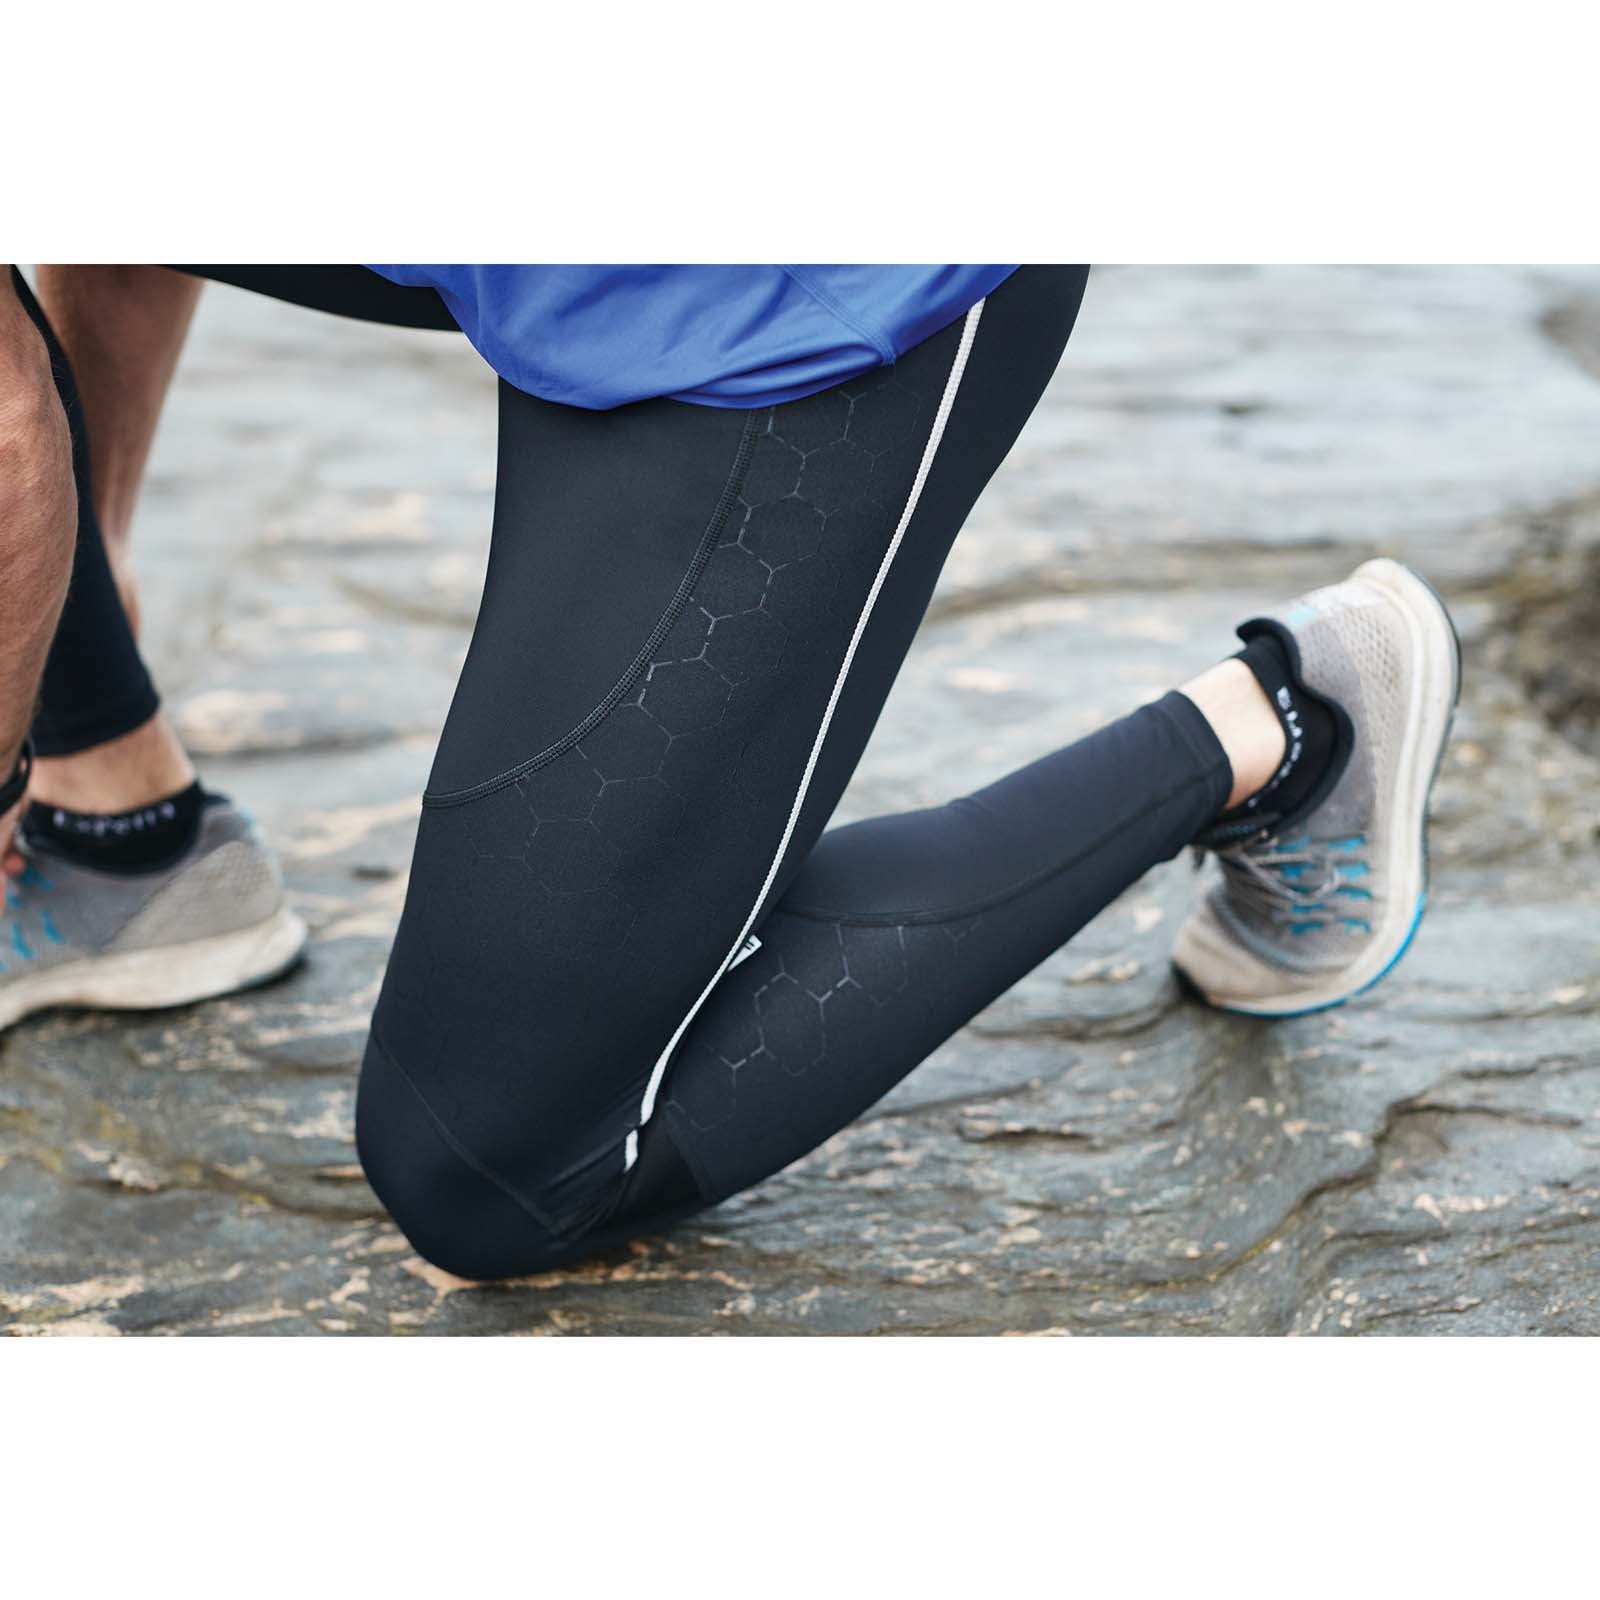 Men's Running Tights / Leggings with Zip - Black - Tribesports Sportswear -  Tribe Sports